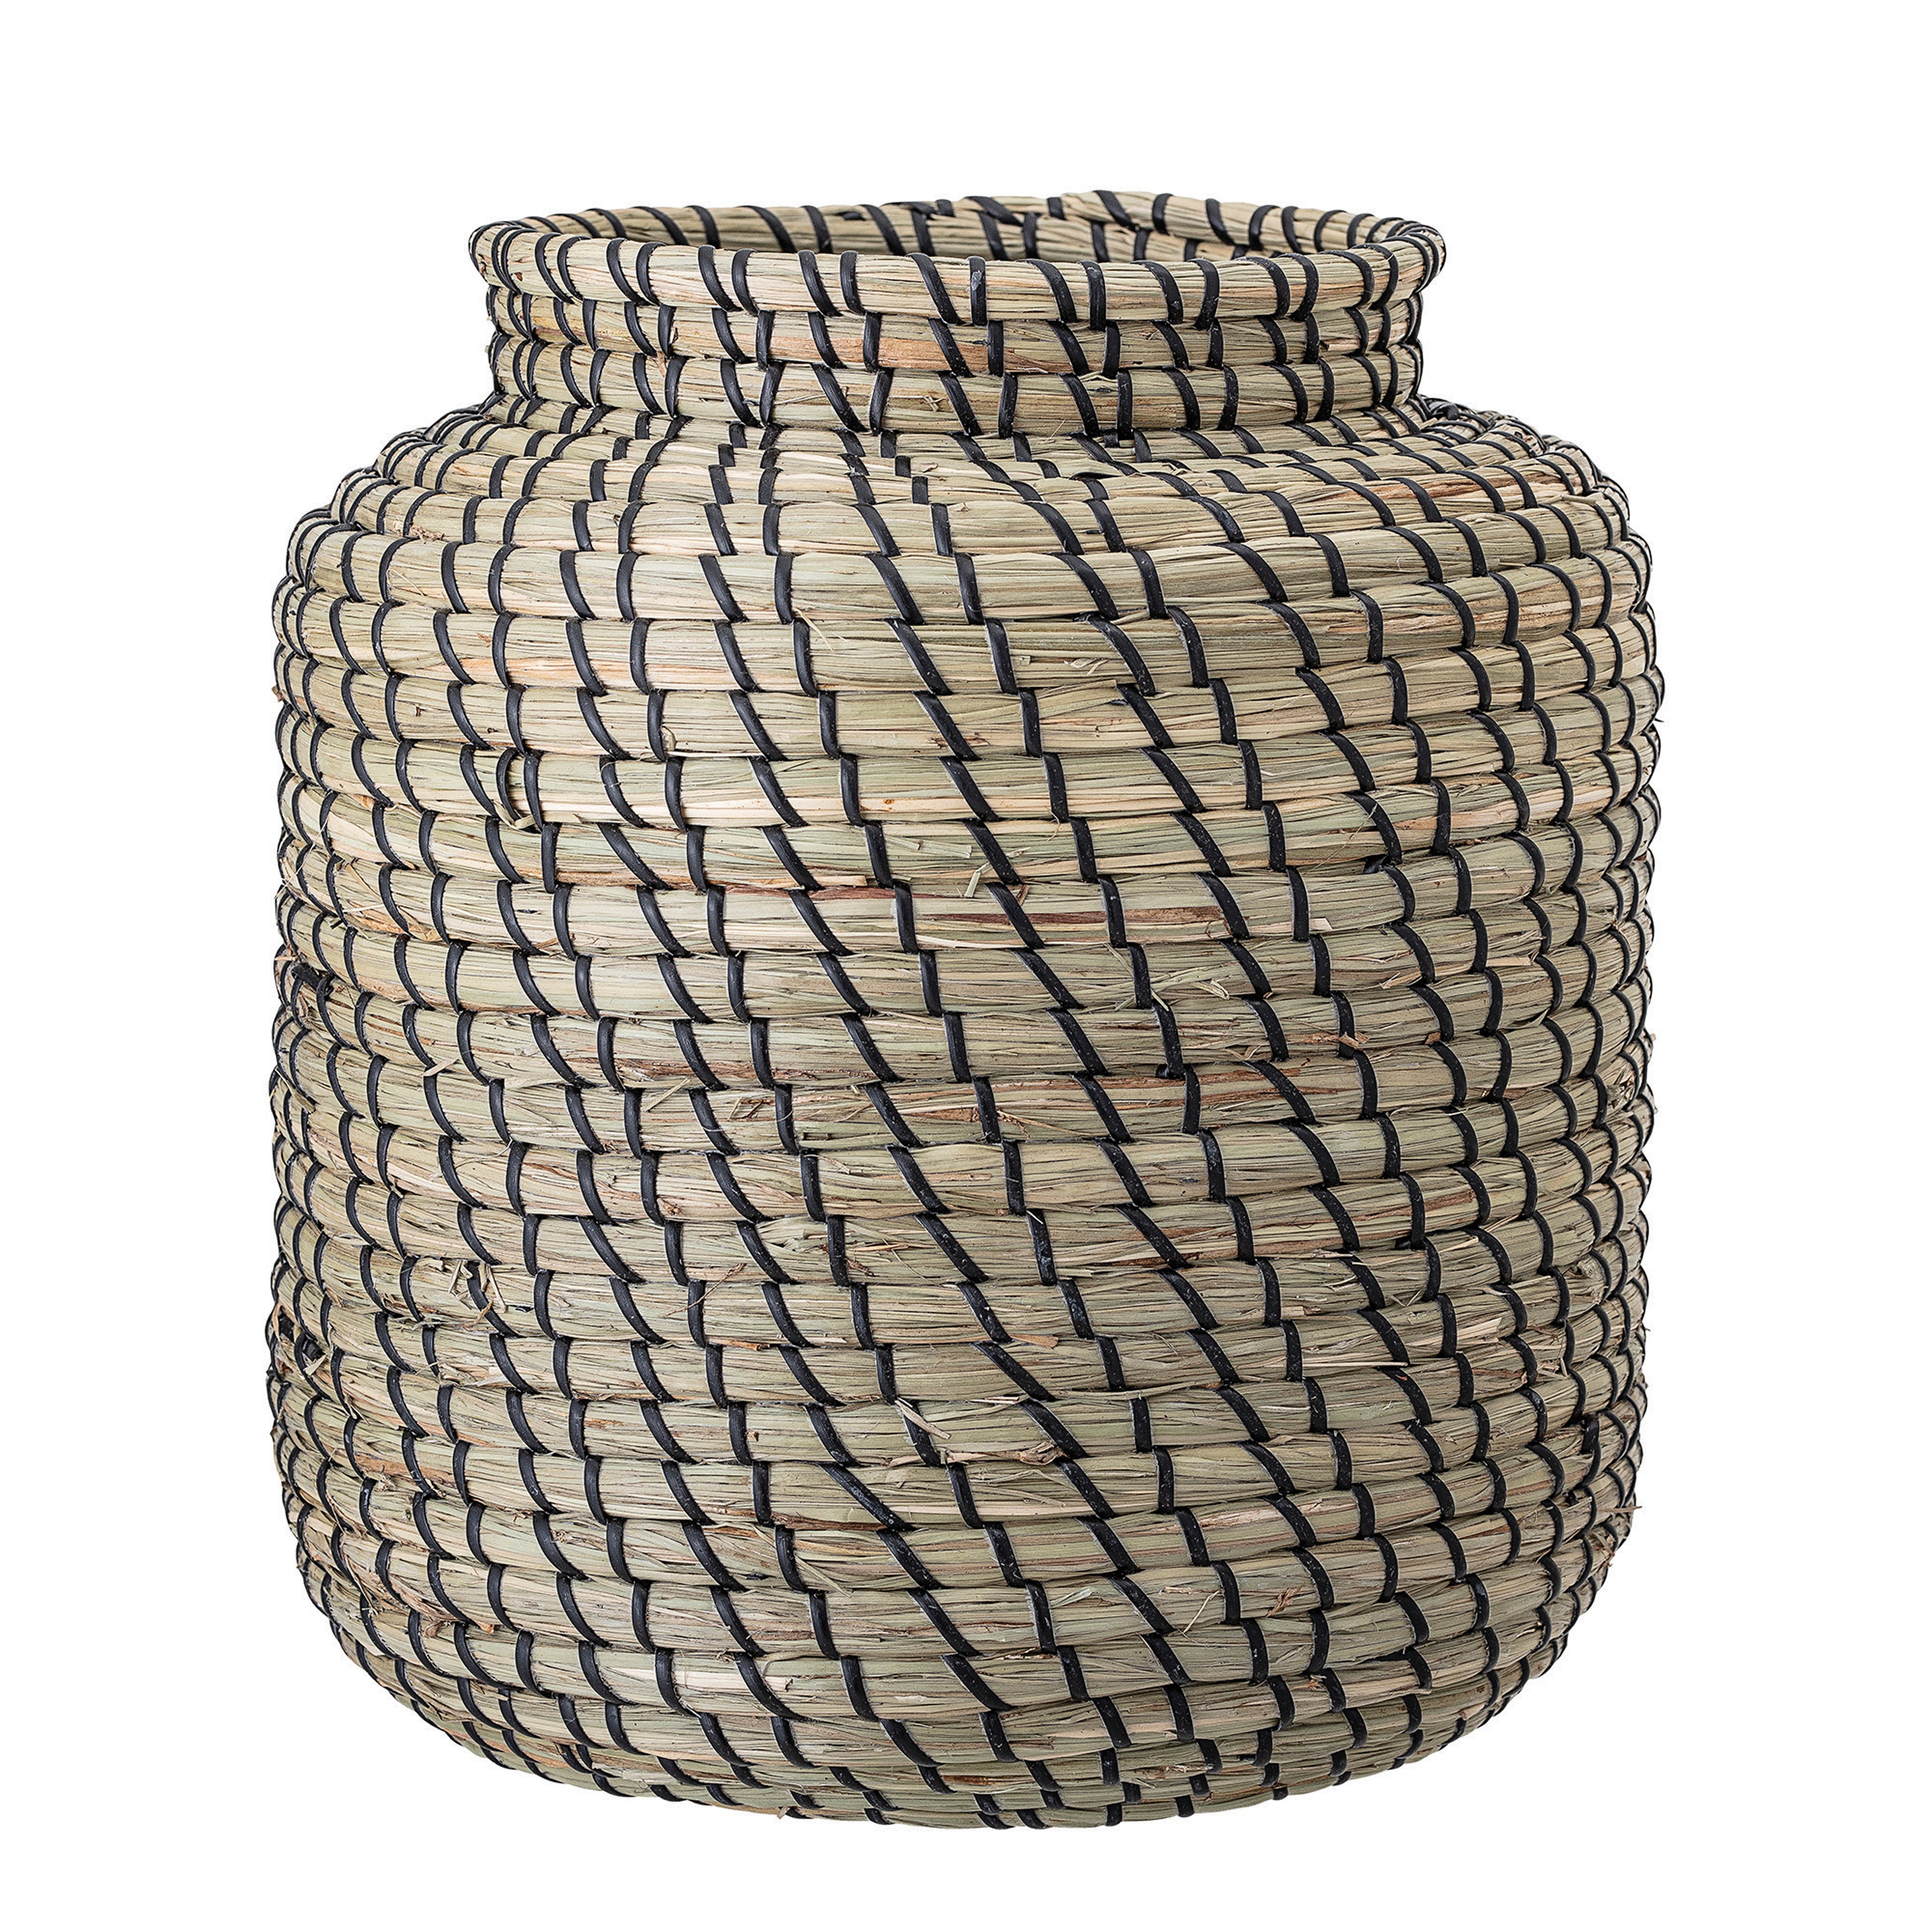 Handwoven Seagrass Basket - Image 0